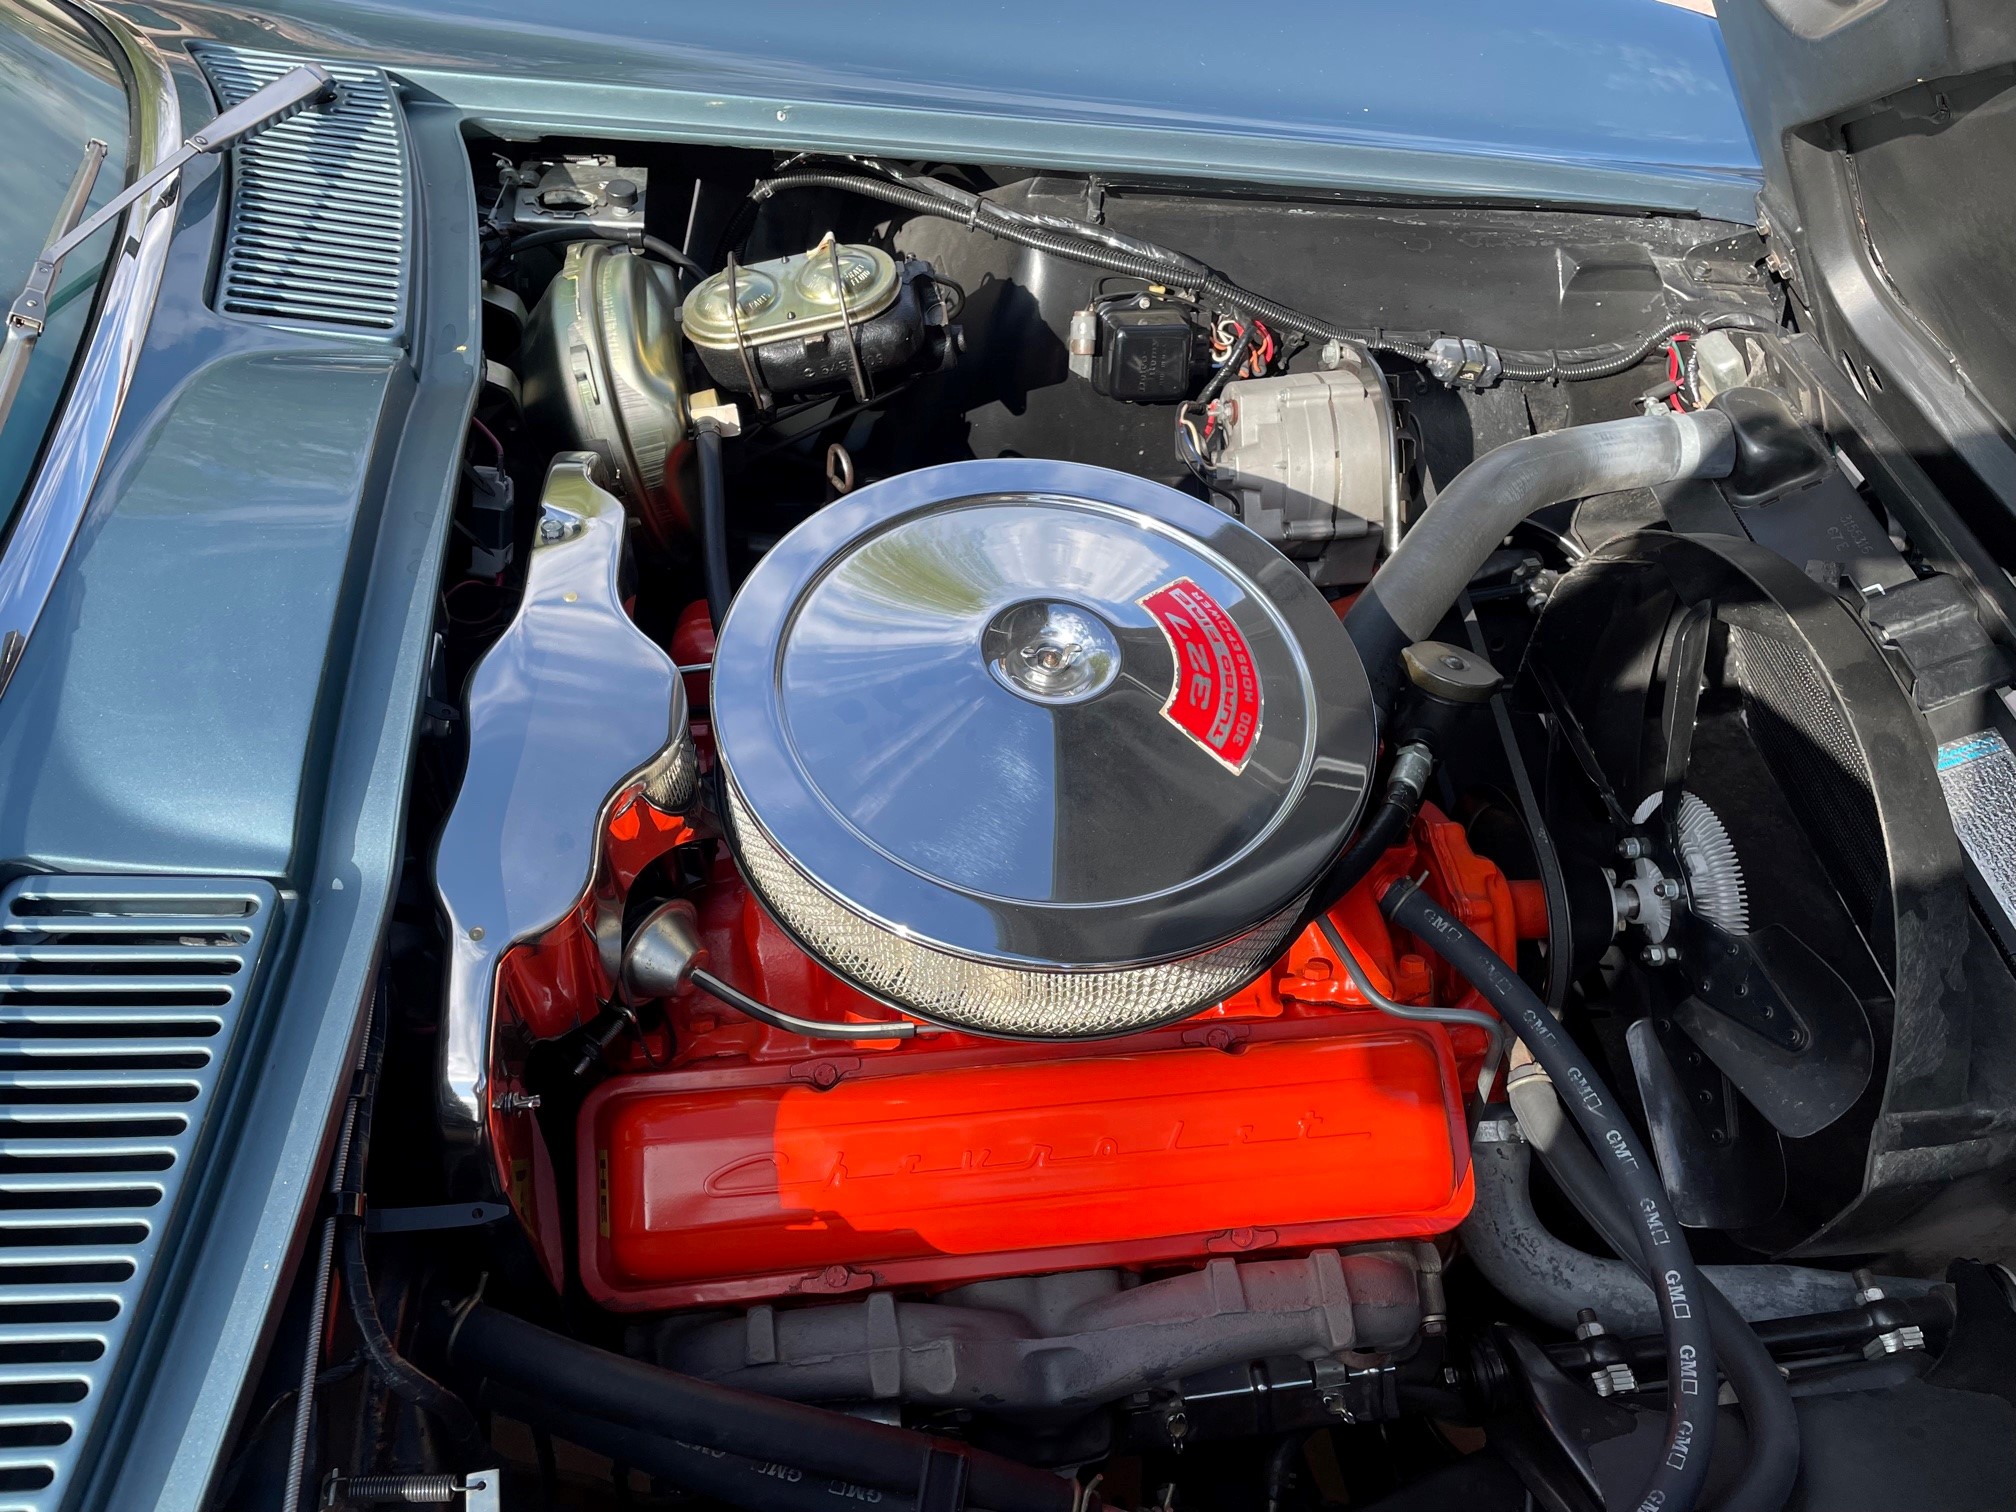 1967 Corvette Convertible 327/300 4-Speed in Lynndale Blue